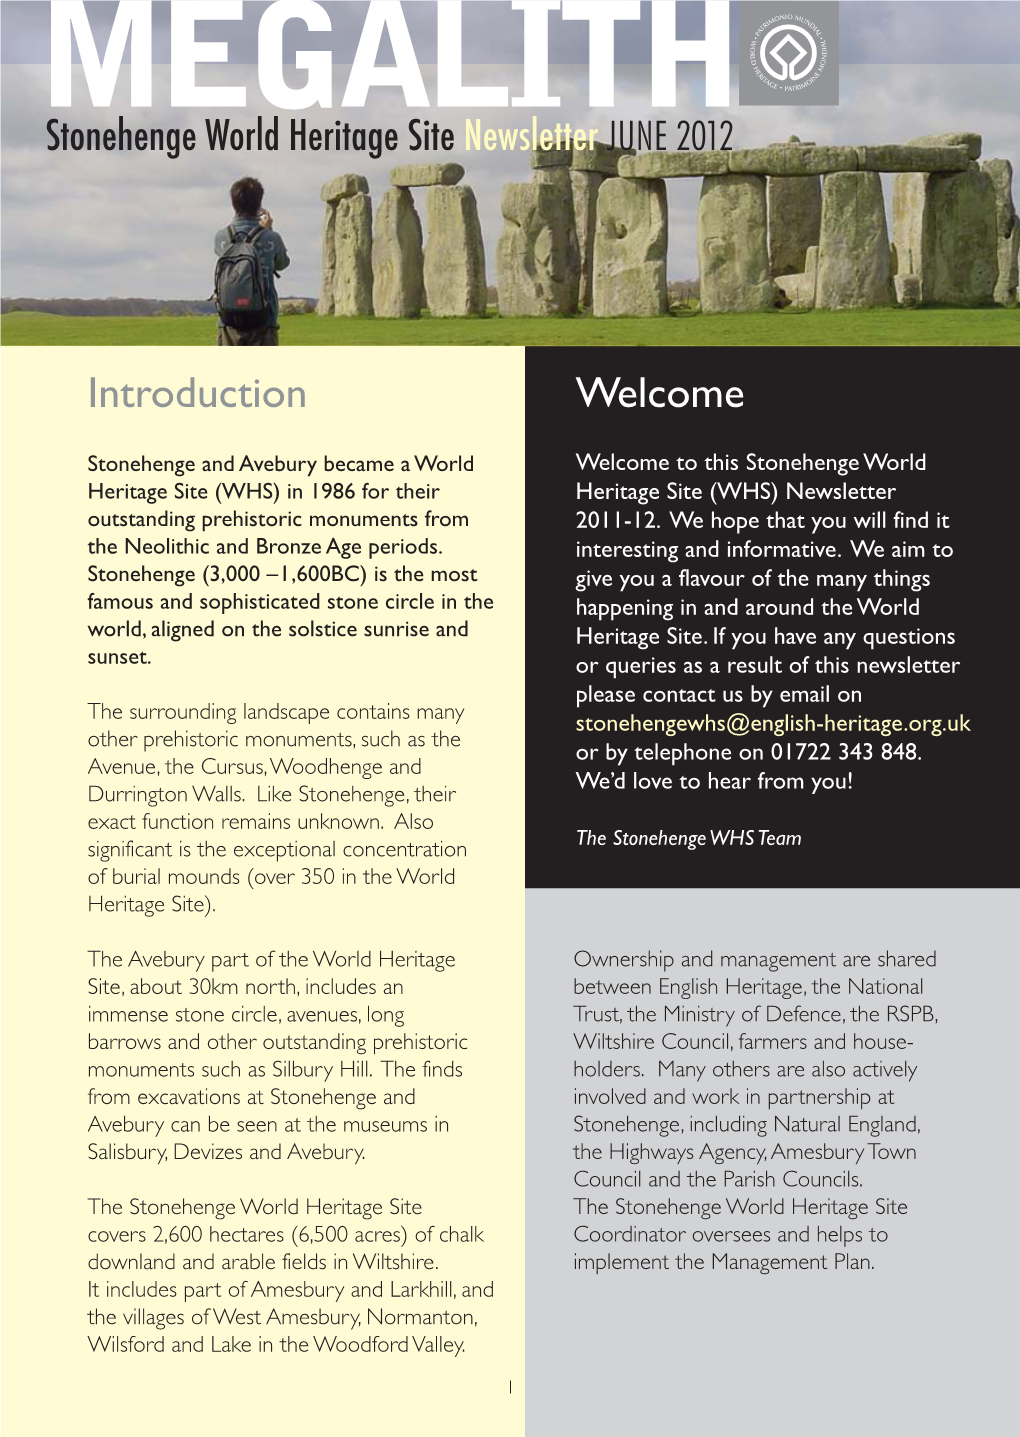 Megalith 2012 – Stonehenge WHS Newsletter